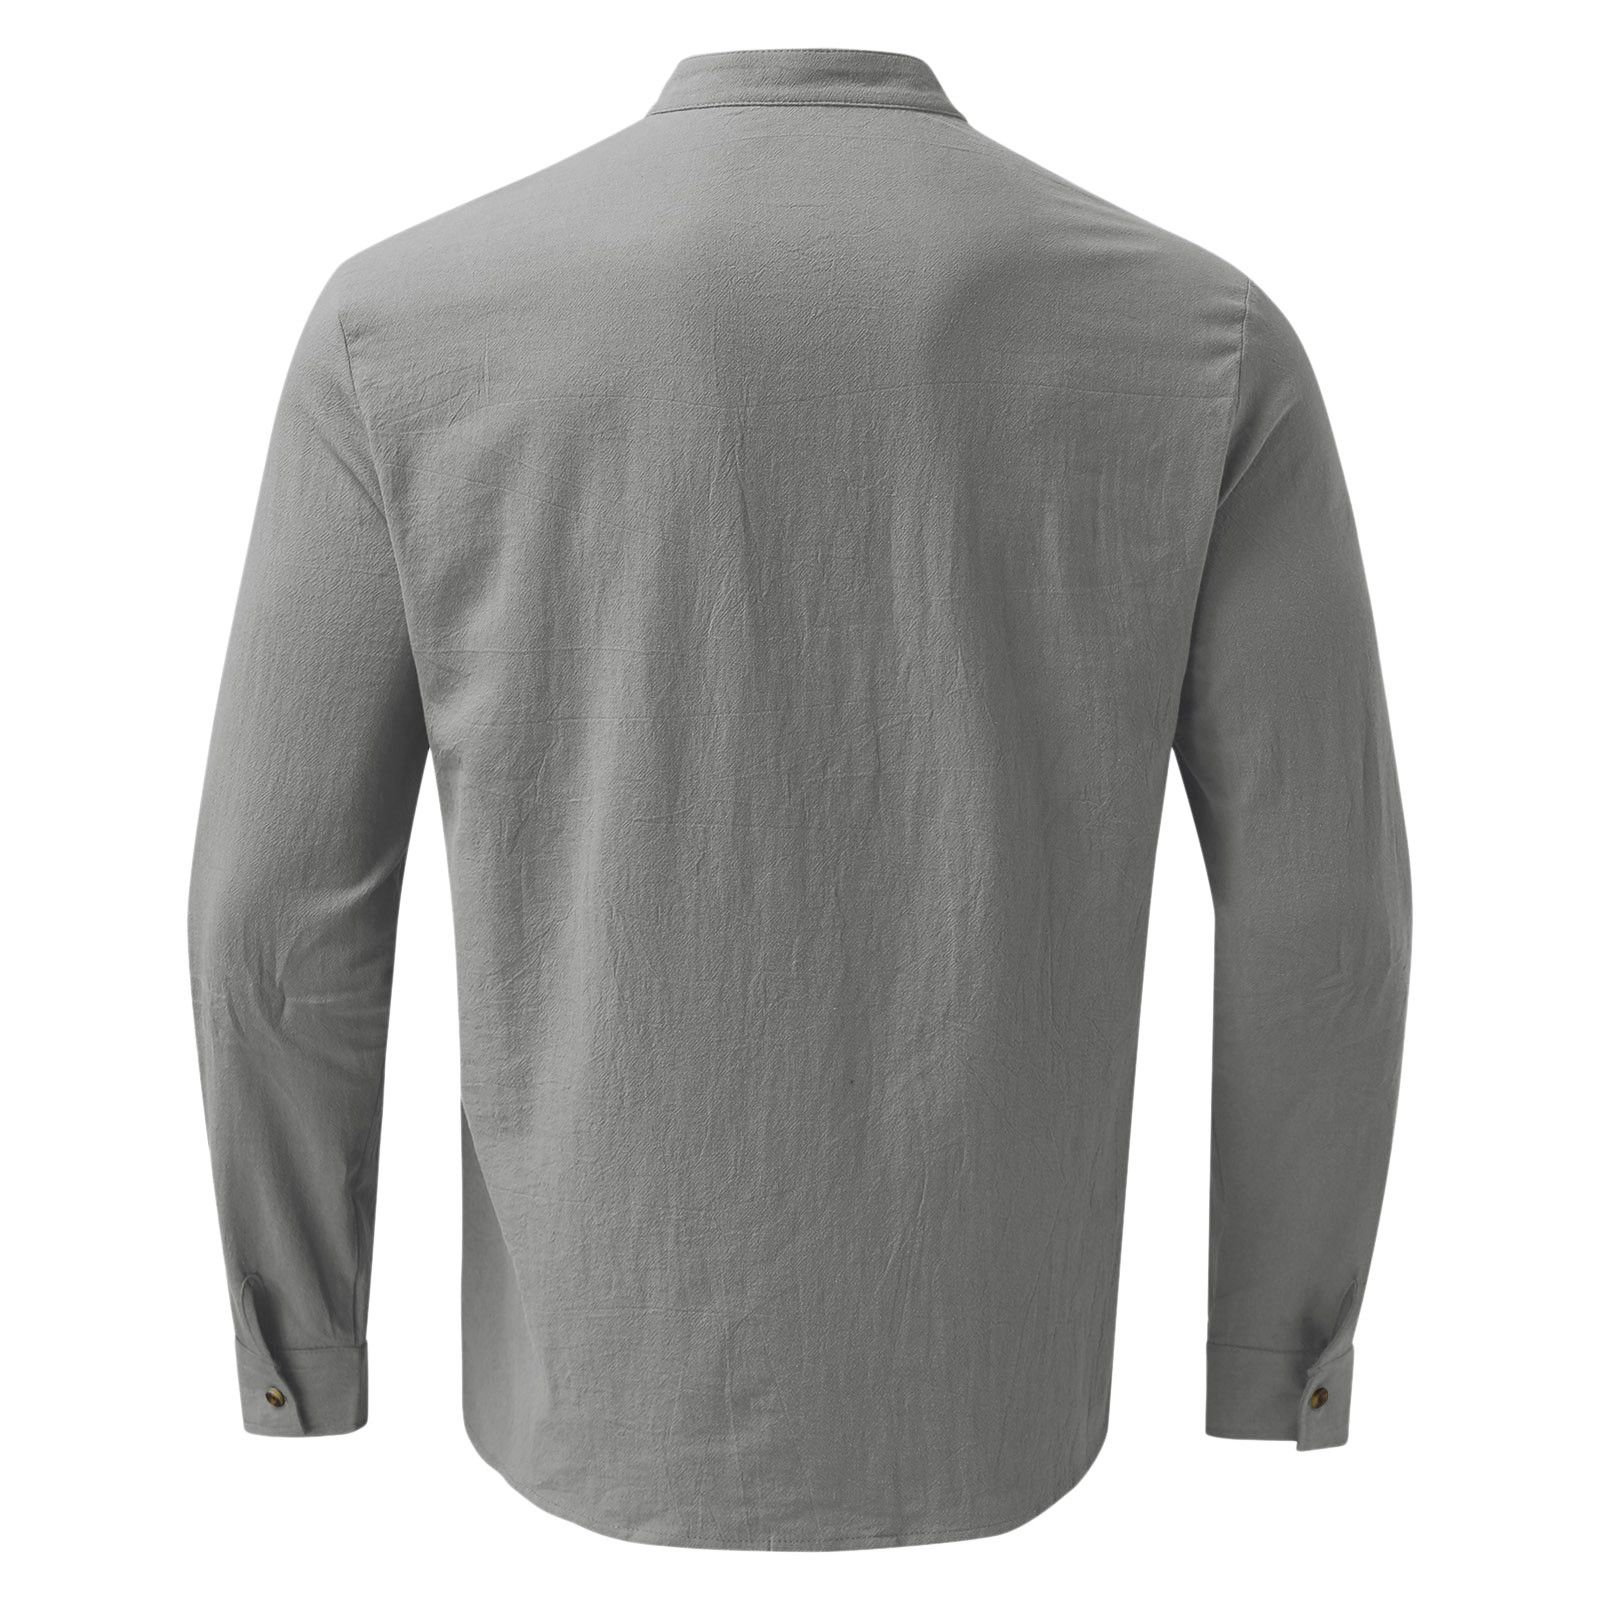 Men-Blouse-Casual-Top-Shirt-Simple-Comfortable-Solid-Color-Button-Collar-Shirt-Top-Loose-Elegant-Top-4.jpg